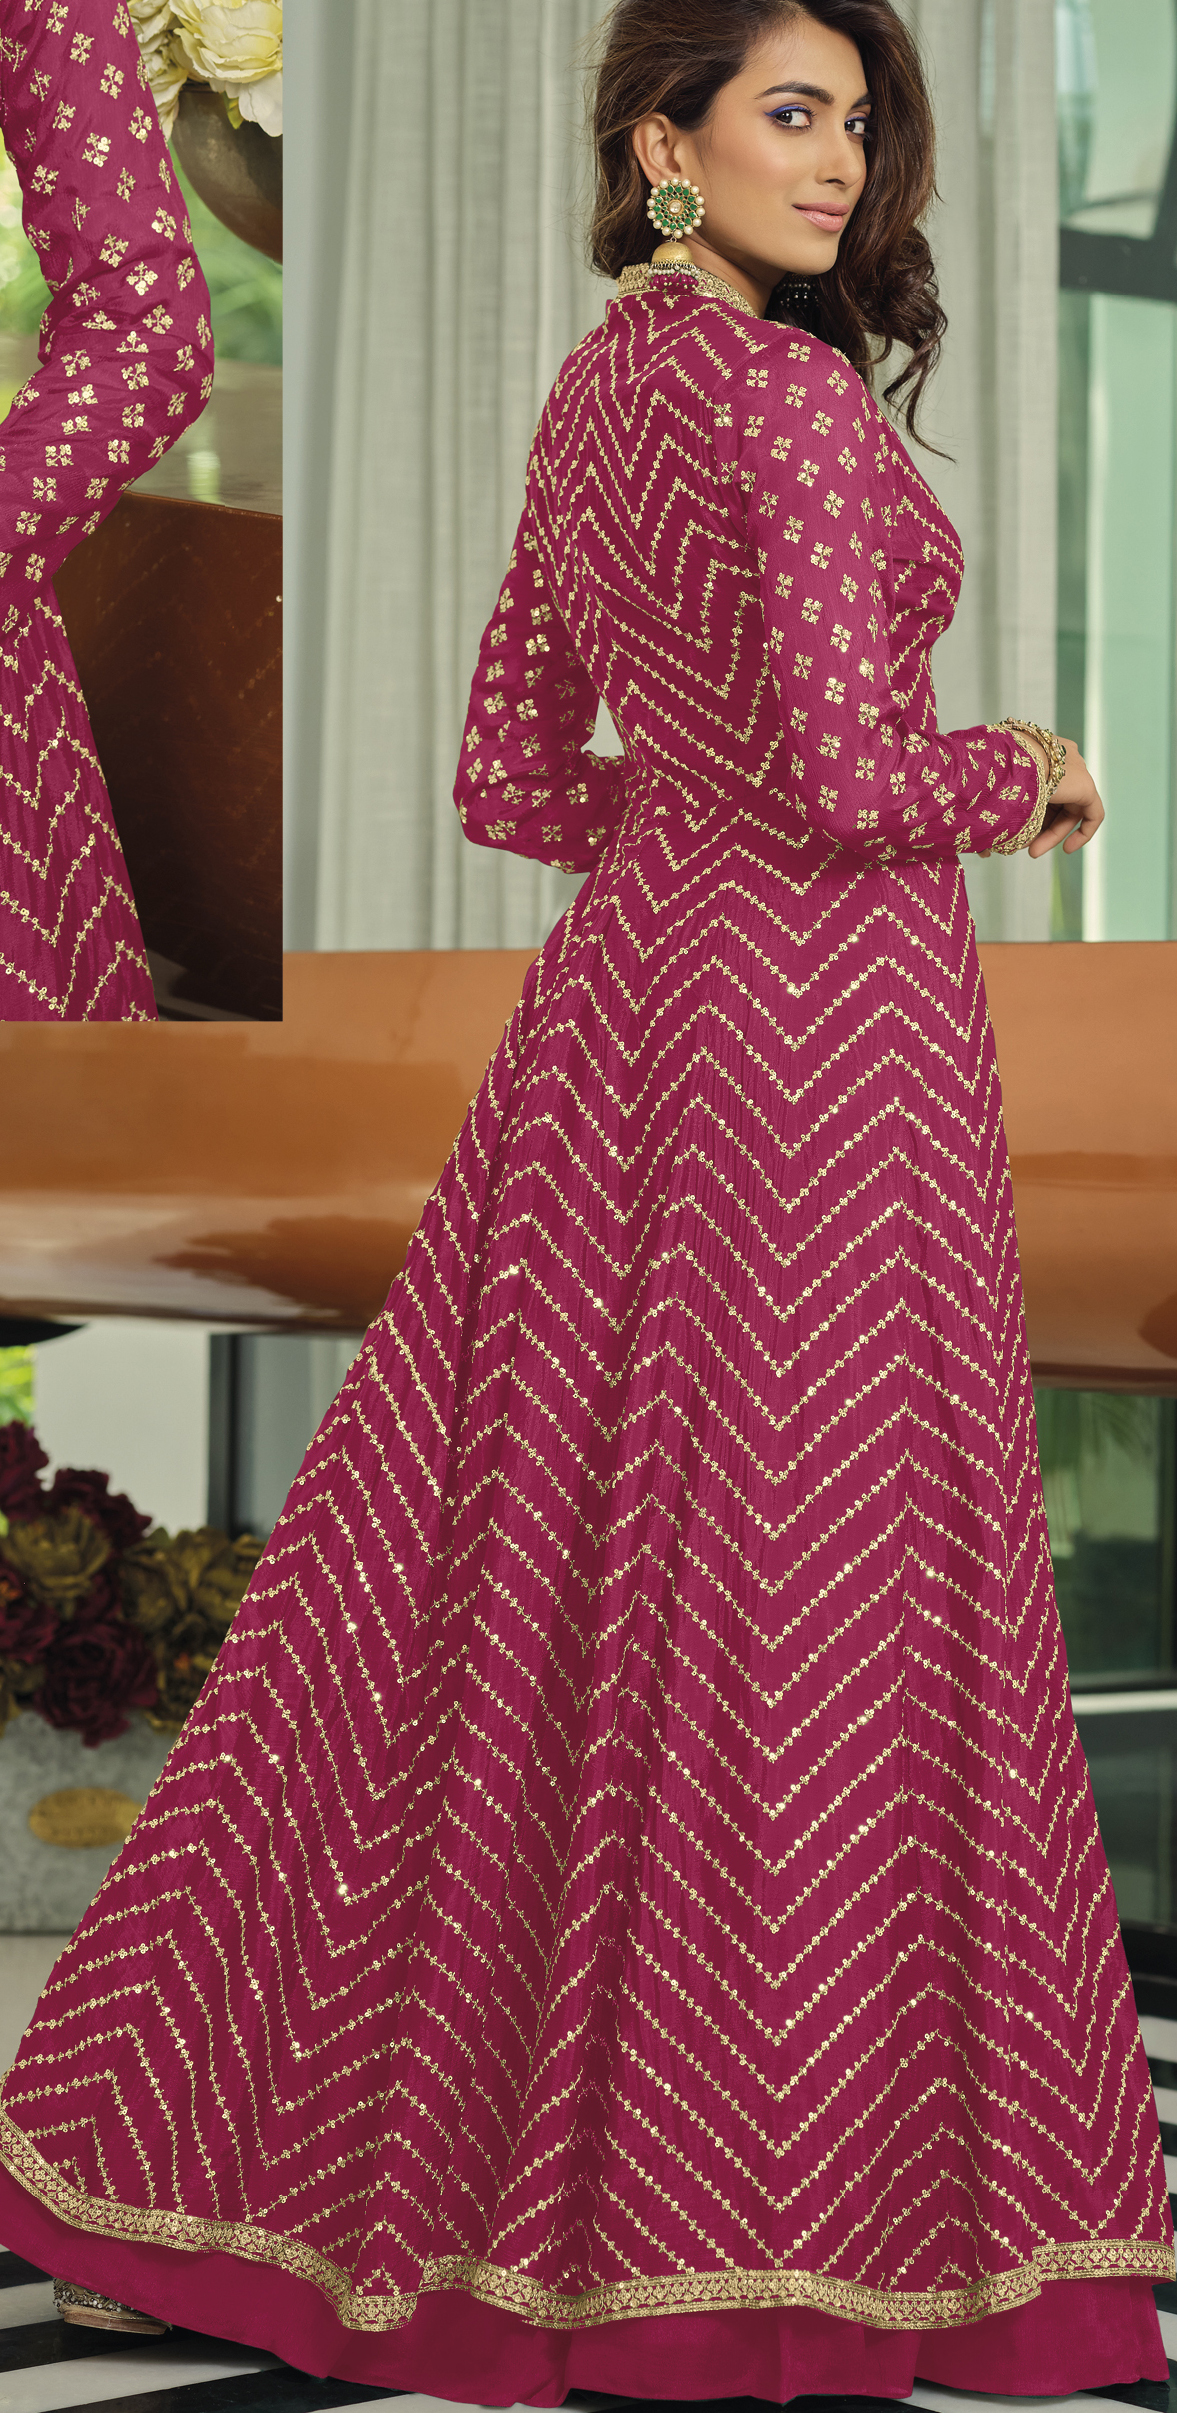 modern blouse designs for lehenga with jacket -8435101920 | Heenastyle